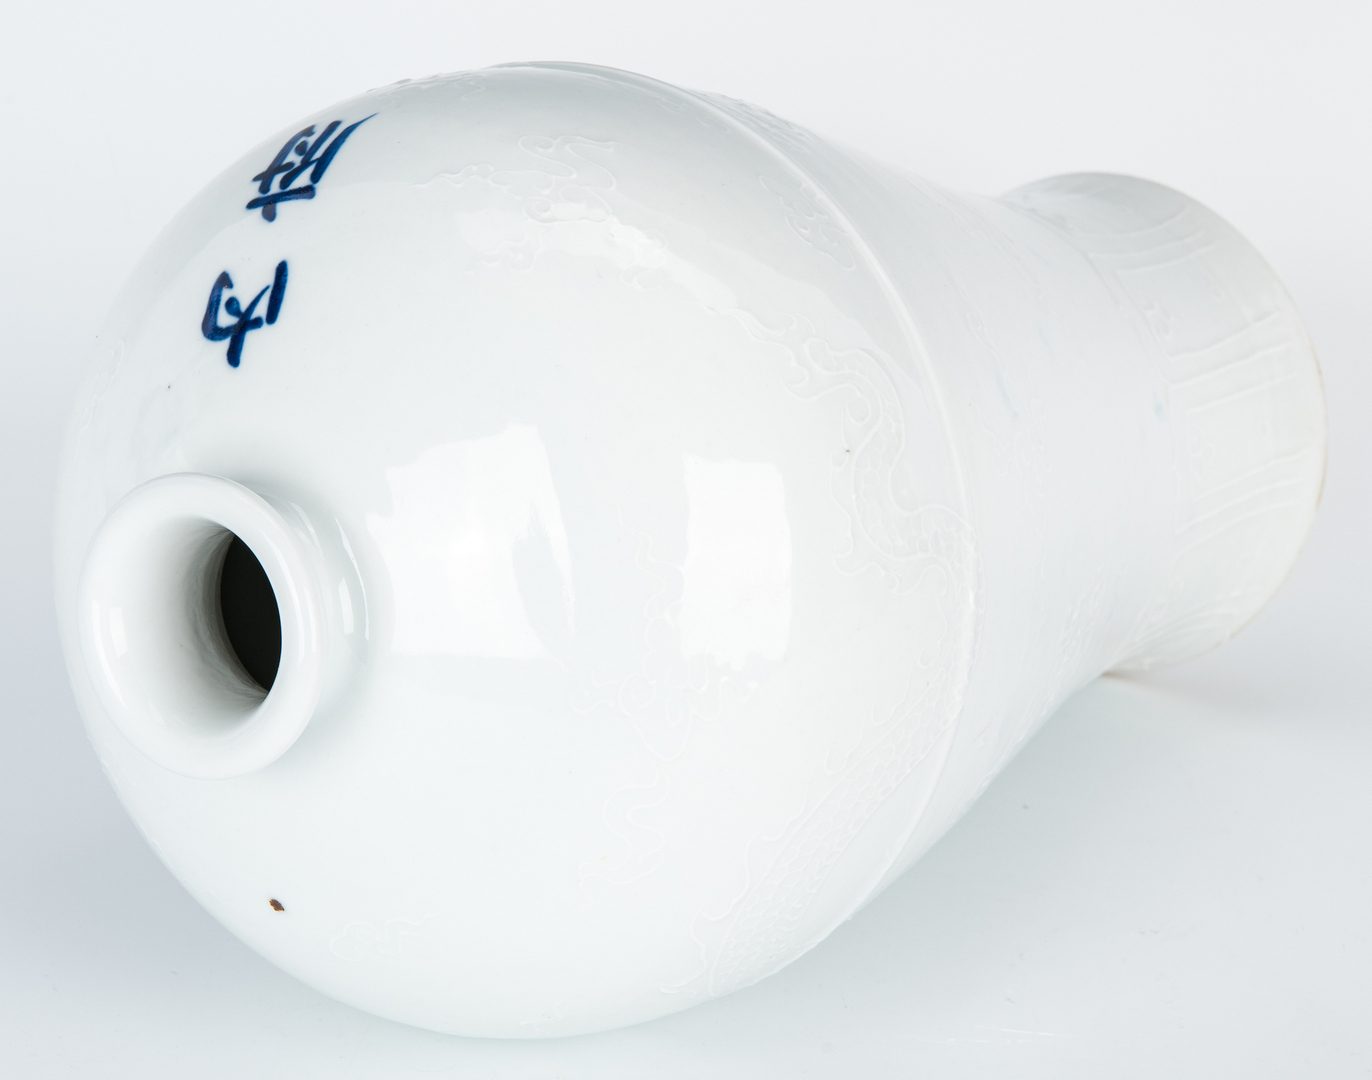 Lot 468: Chinese Blue & White Vase & White Mei Ping Vase